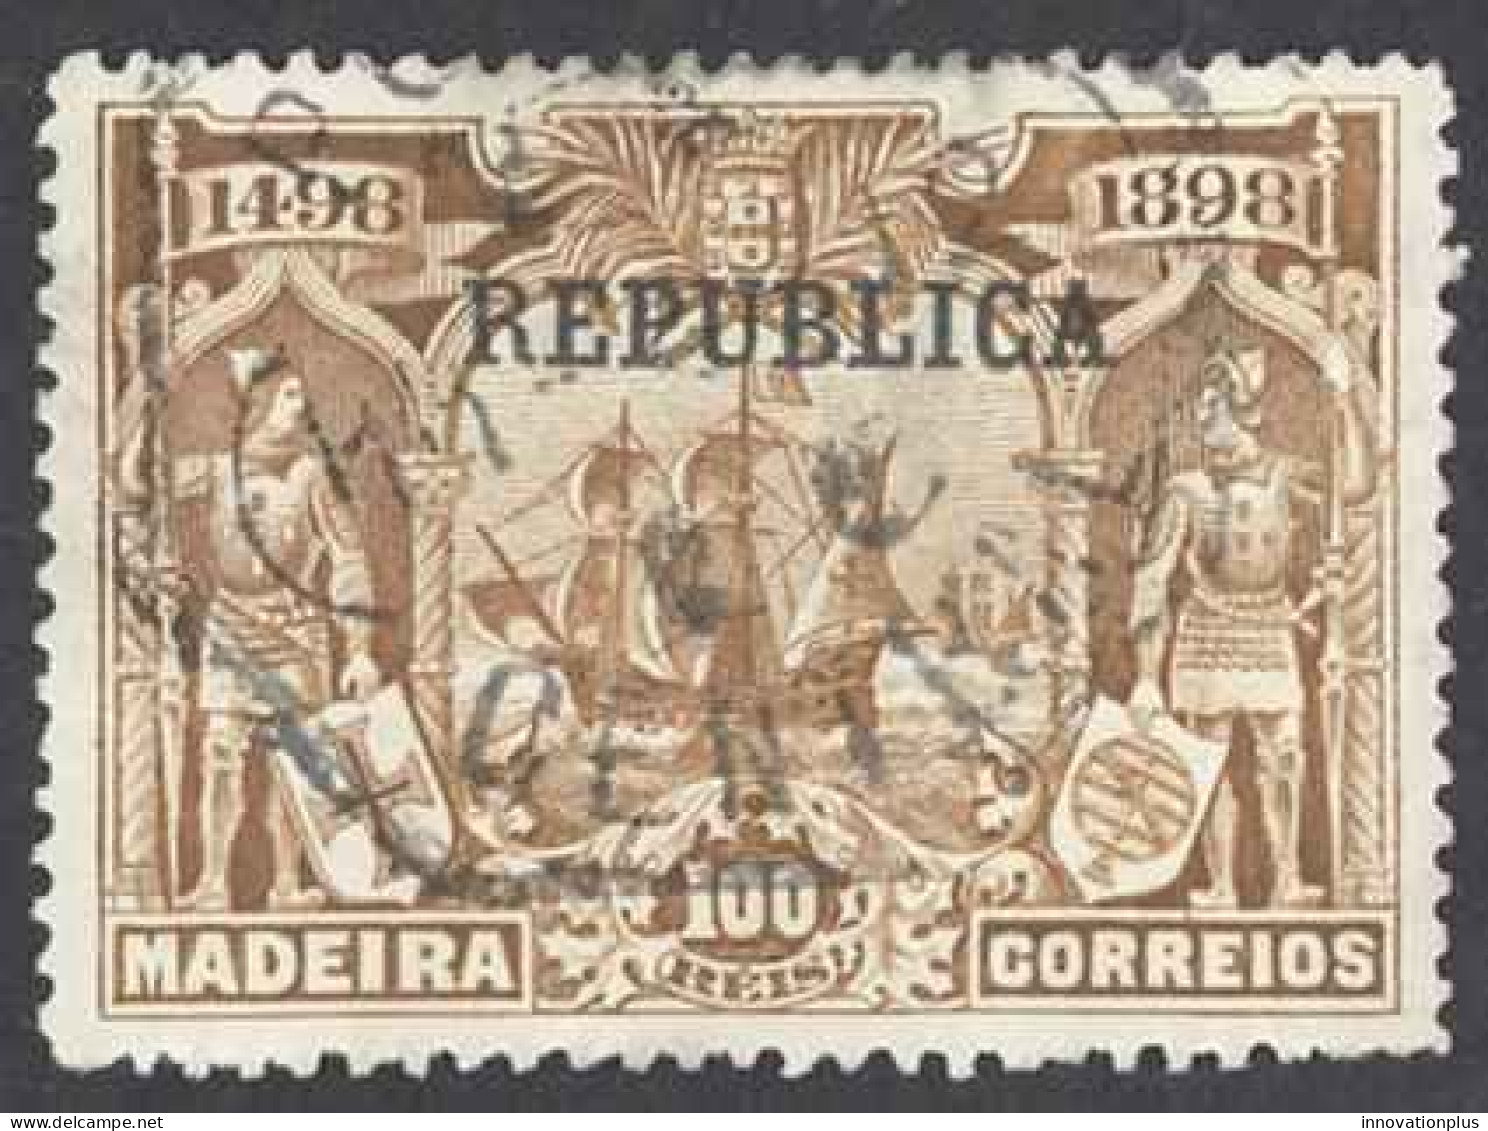 Portugal Sc# 191 Used (a) 1911 100r Overprint Vasco De Gama Issue - Usati